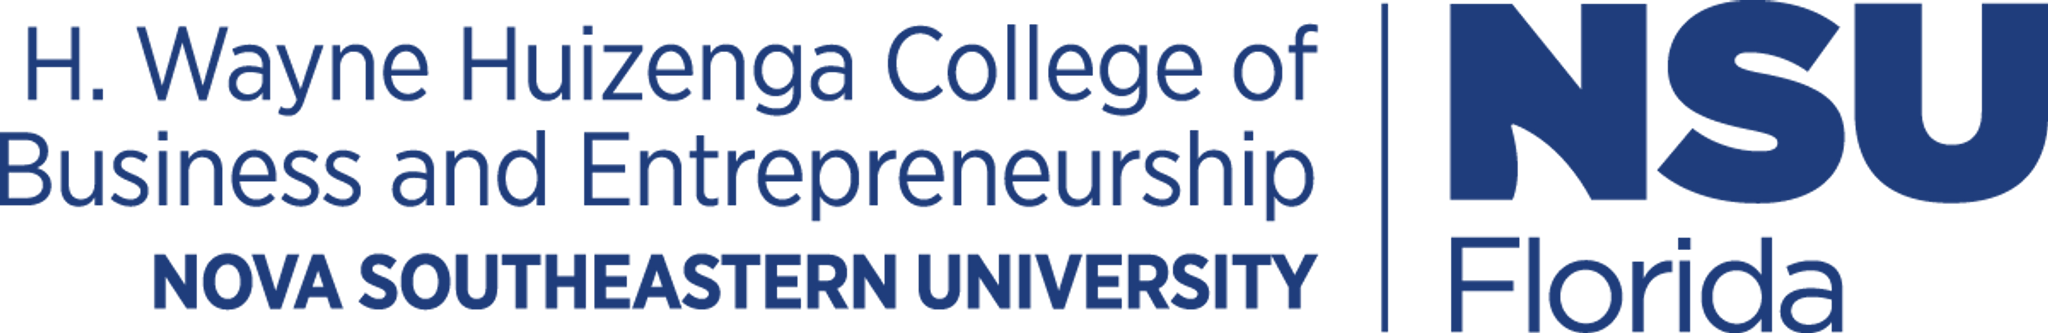 H. Wayne Huizenga College of Business and Entrepreneurship Digital Archives